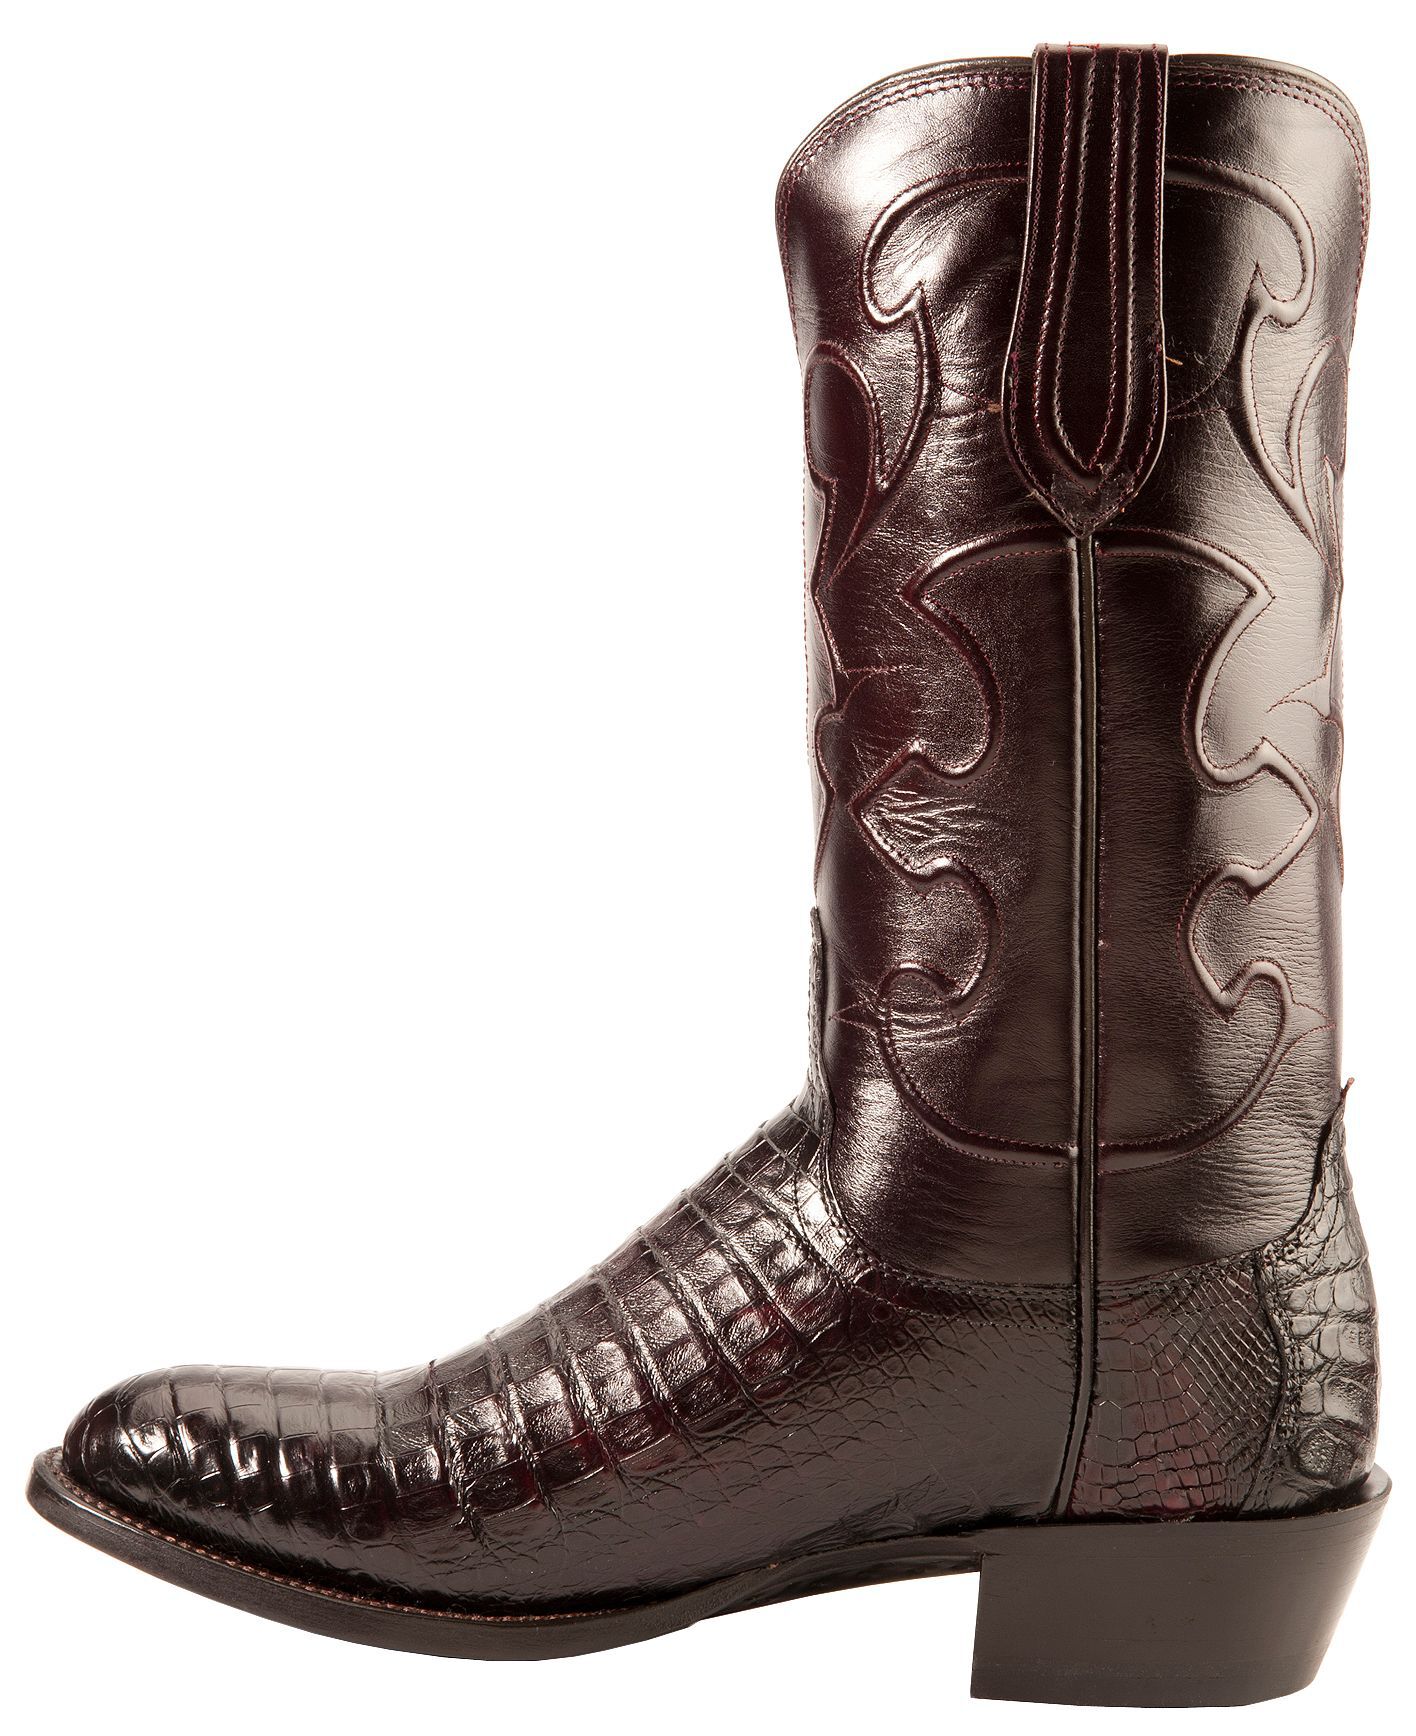 crocodile boots price